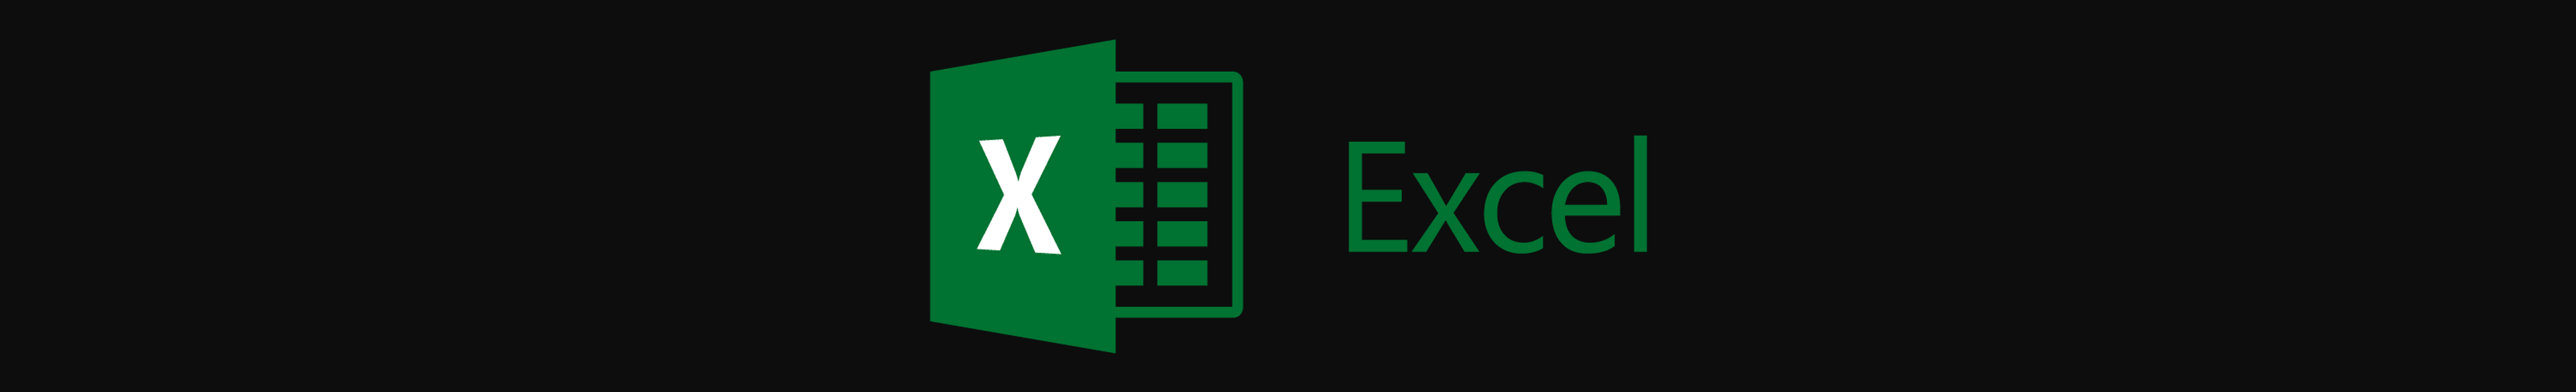 Microsoft Excel Logo - Top 10 Data Analytics Tools - Edureka